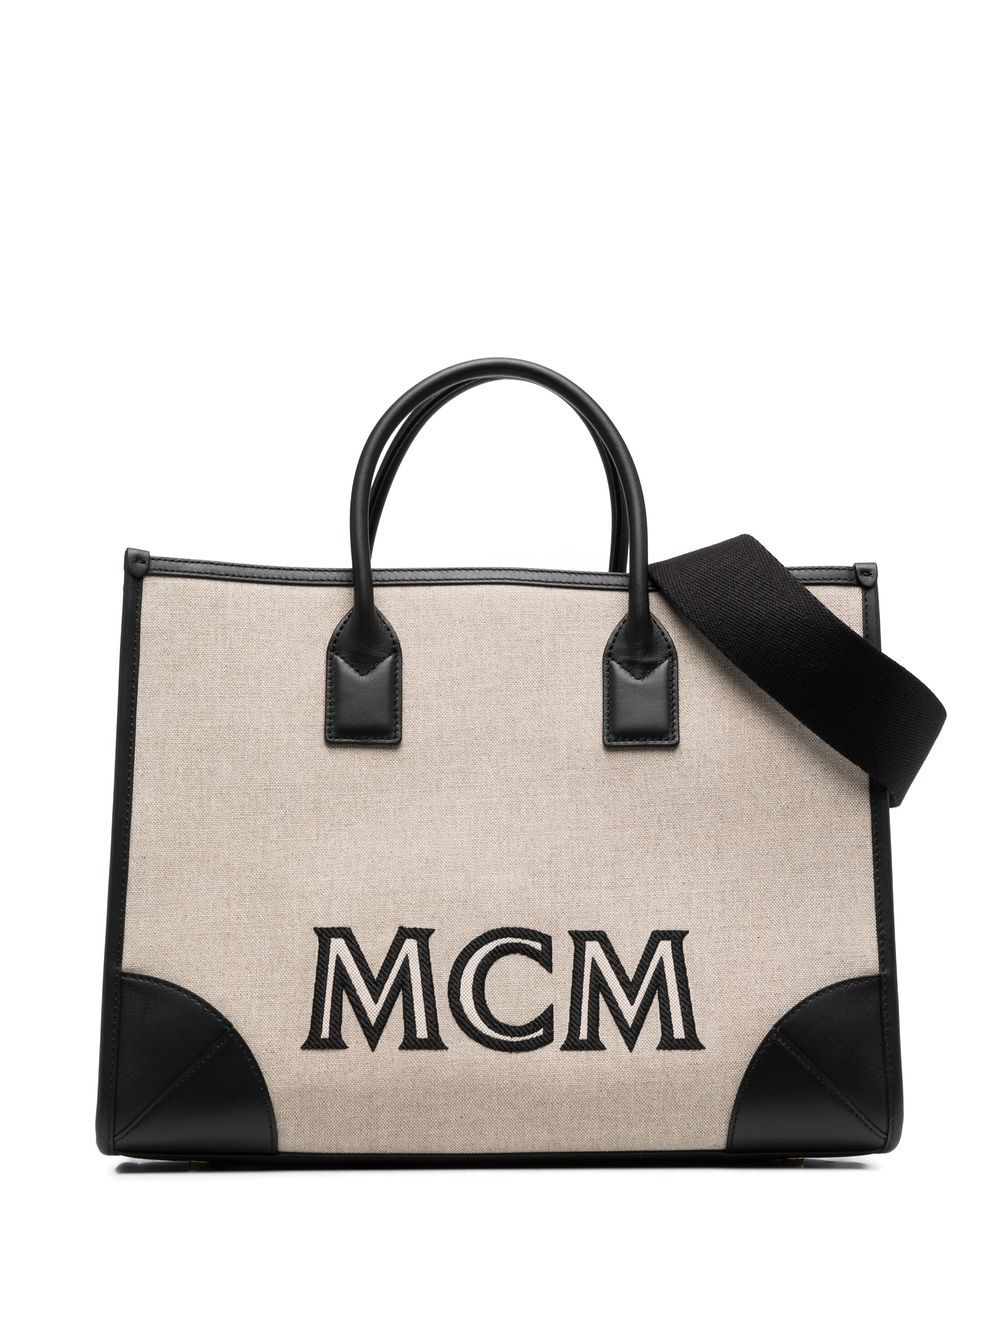 Mcm 'München' Tote Bag